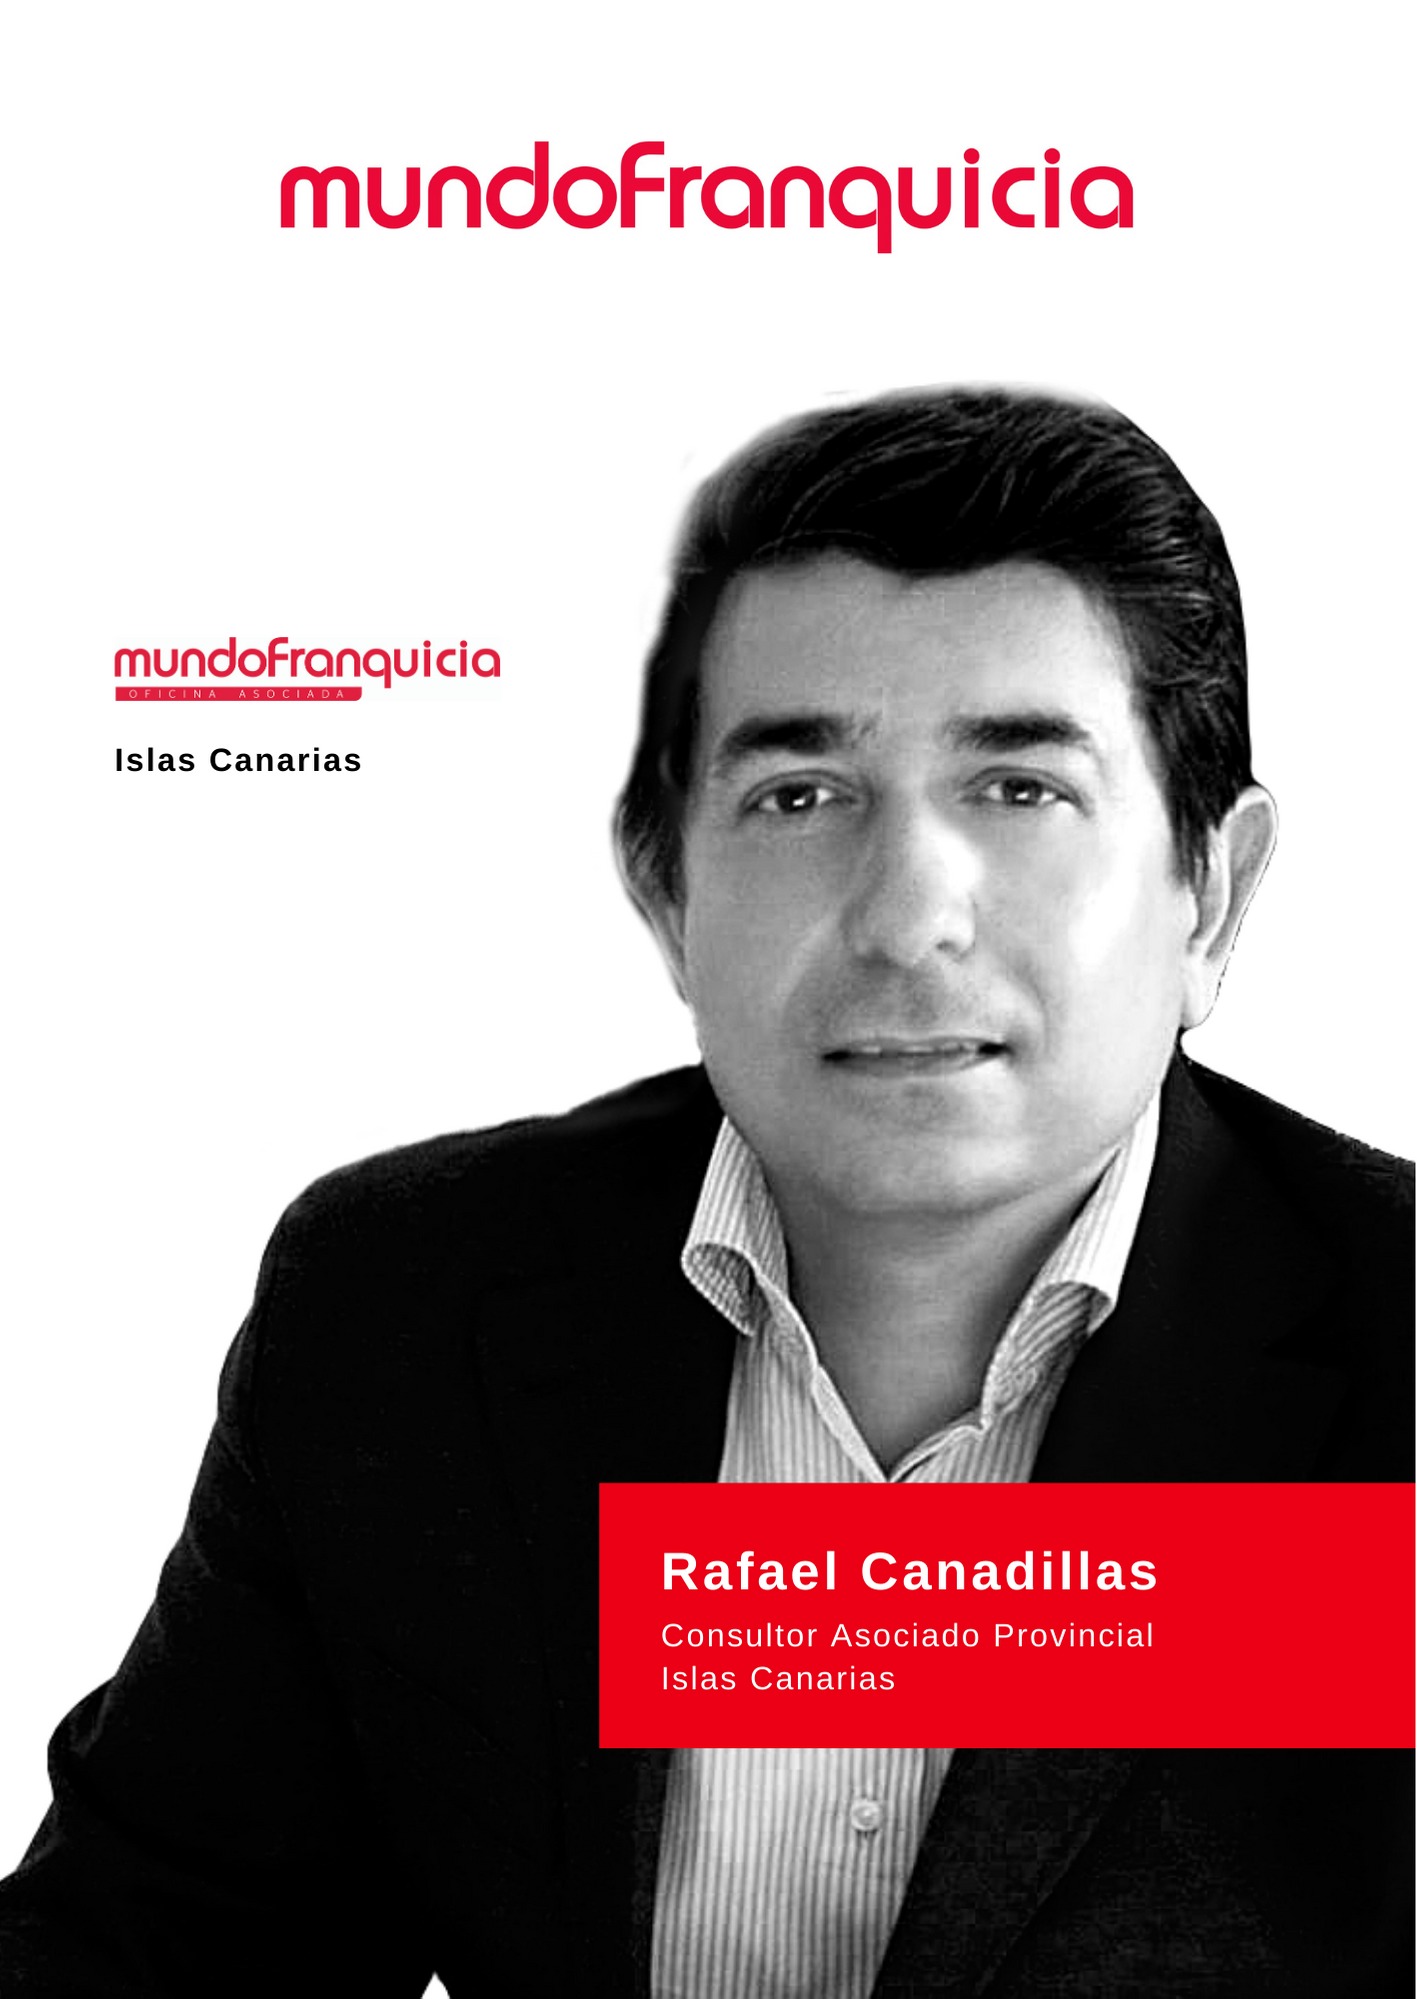 Rafael Cañadillas